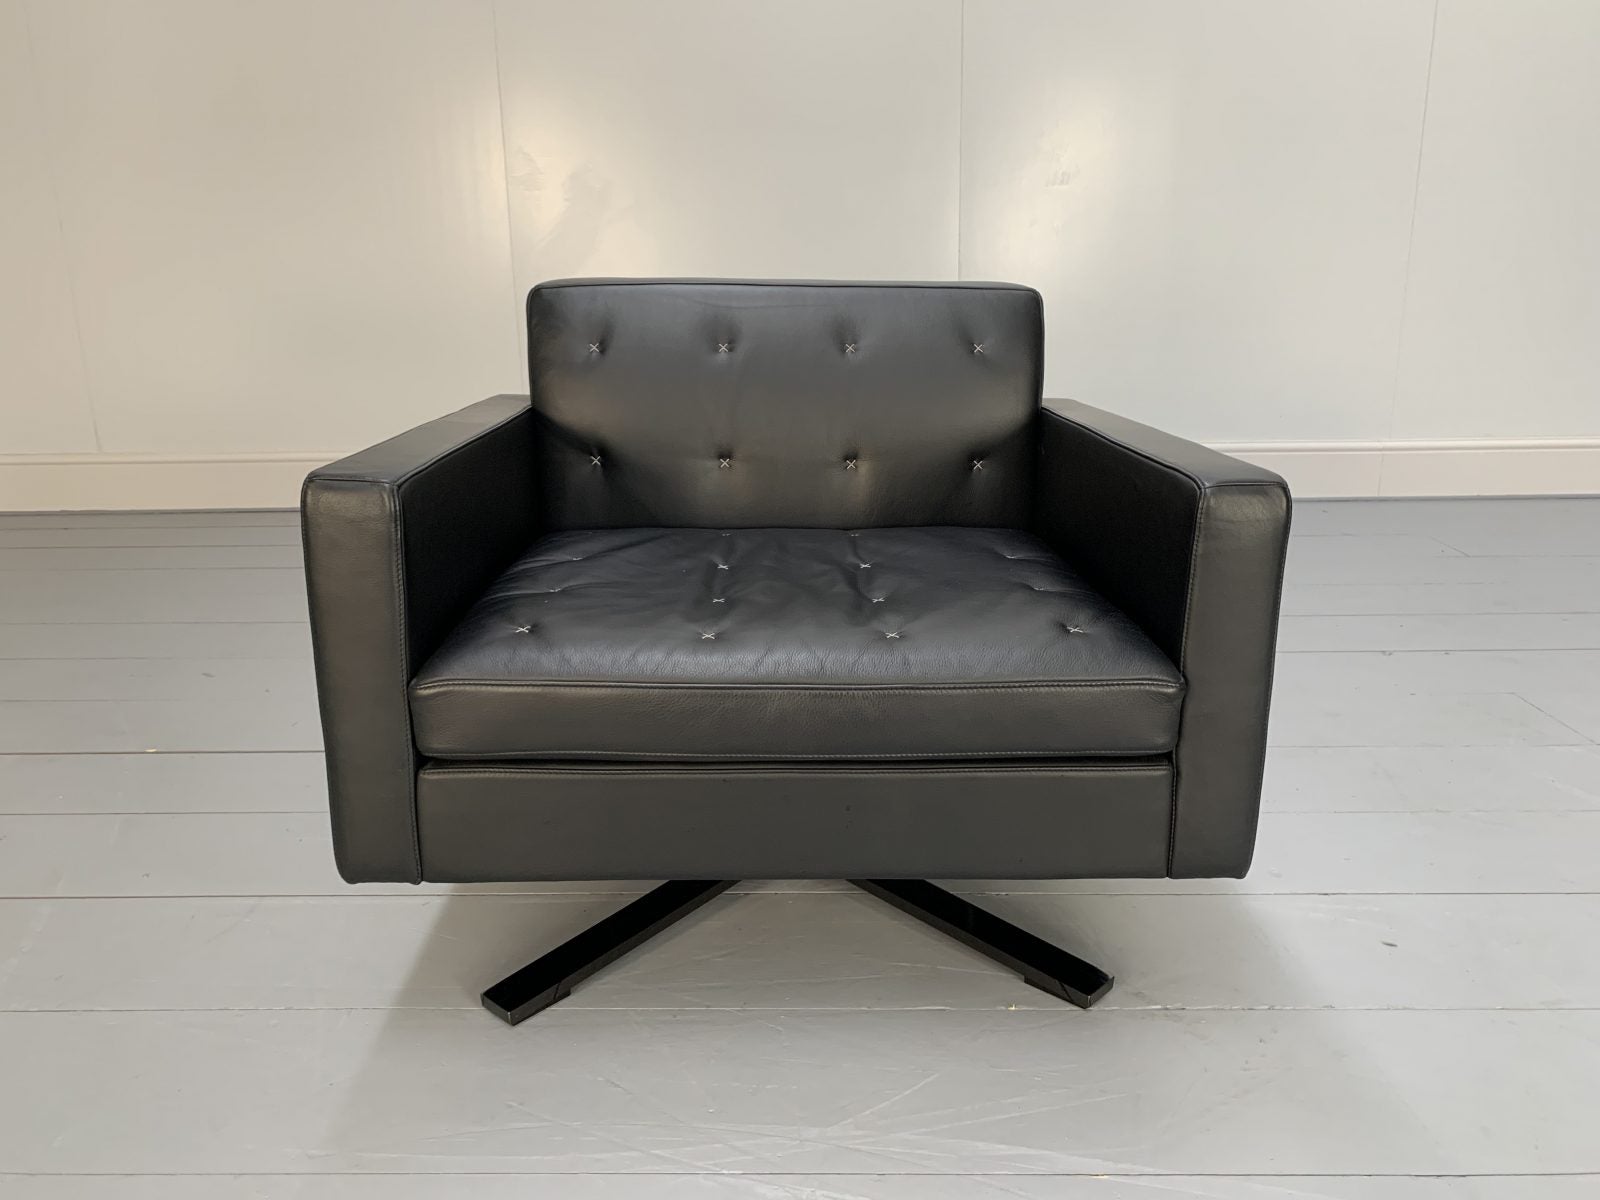 Immaculate Poltrona Frau “Kennedee” Armchair in Black “Pelle Frau SC” Leather For Sale